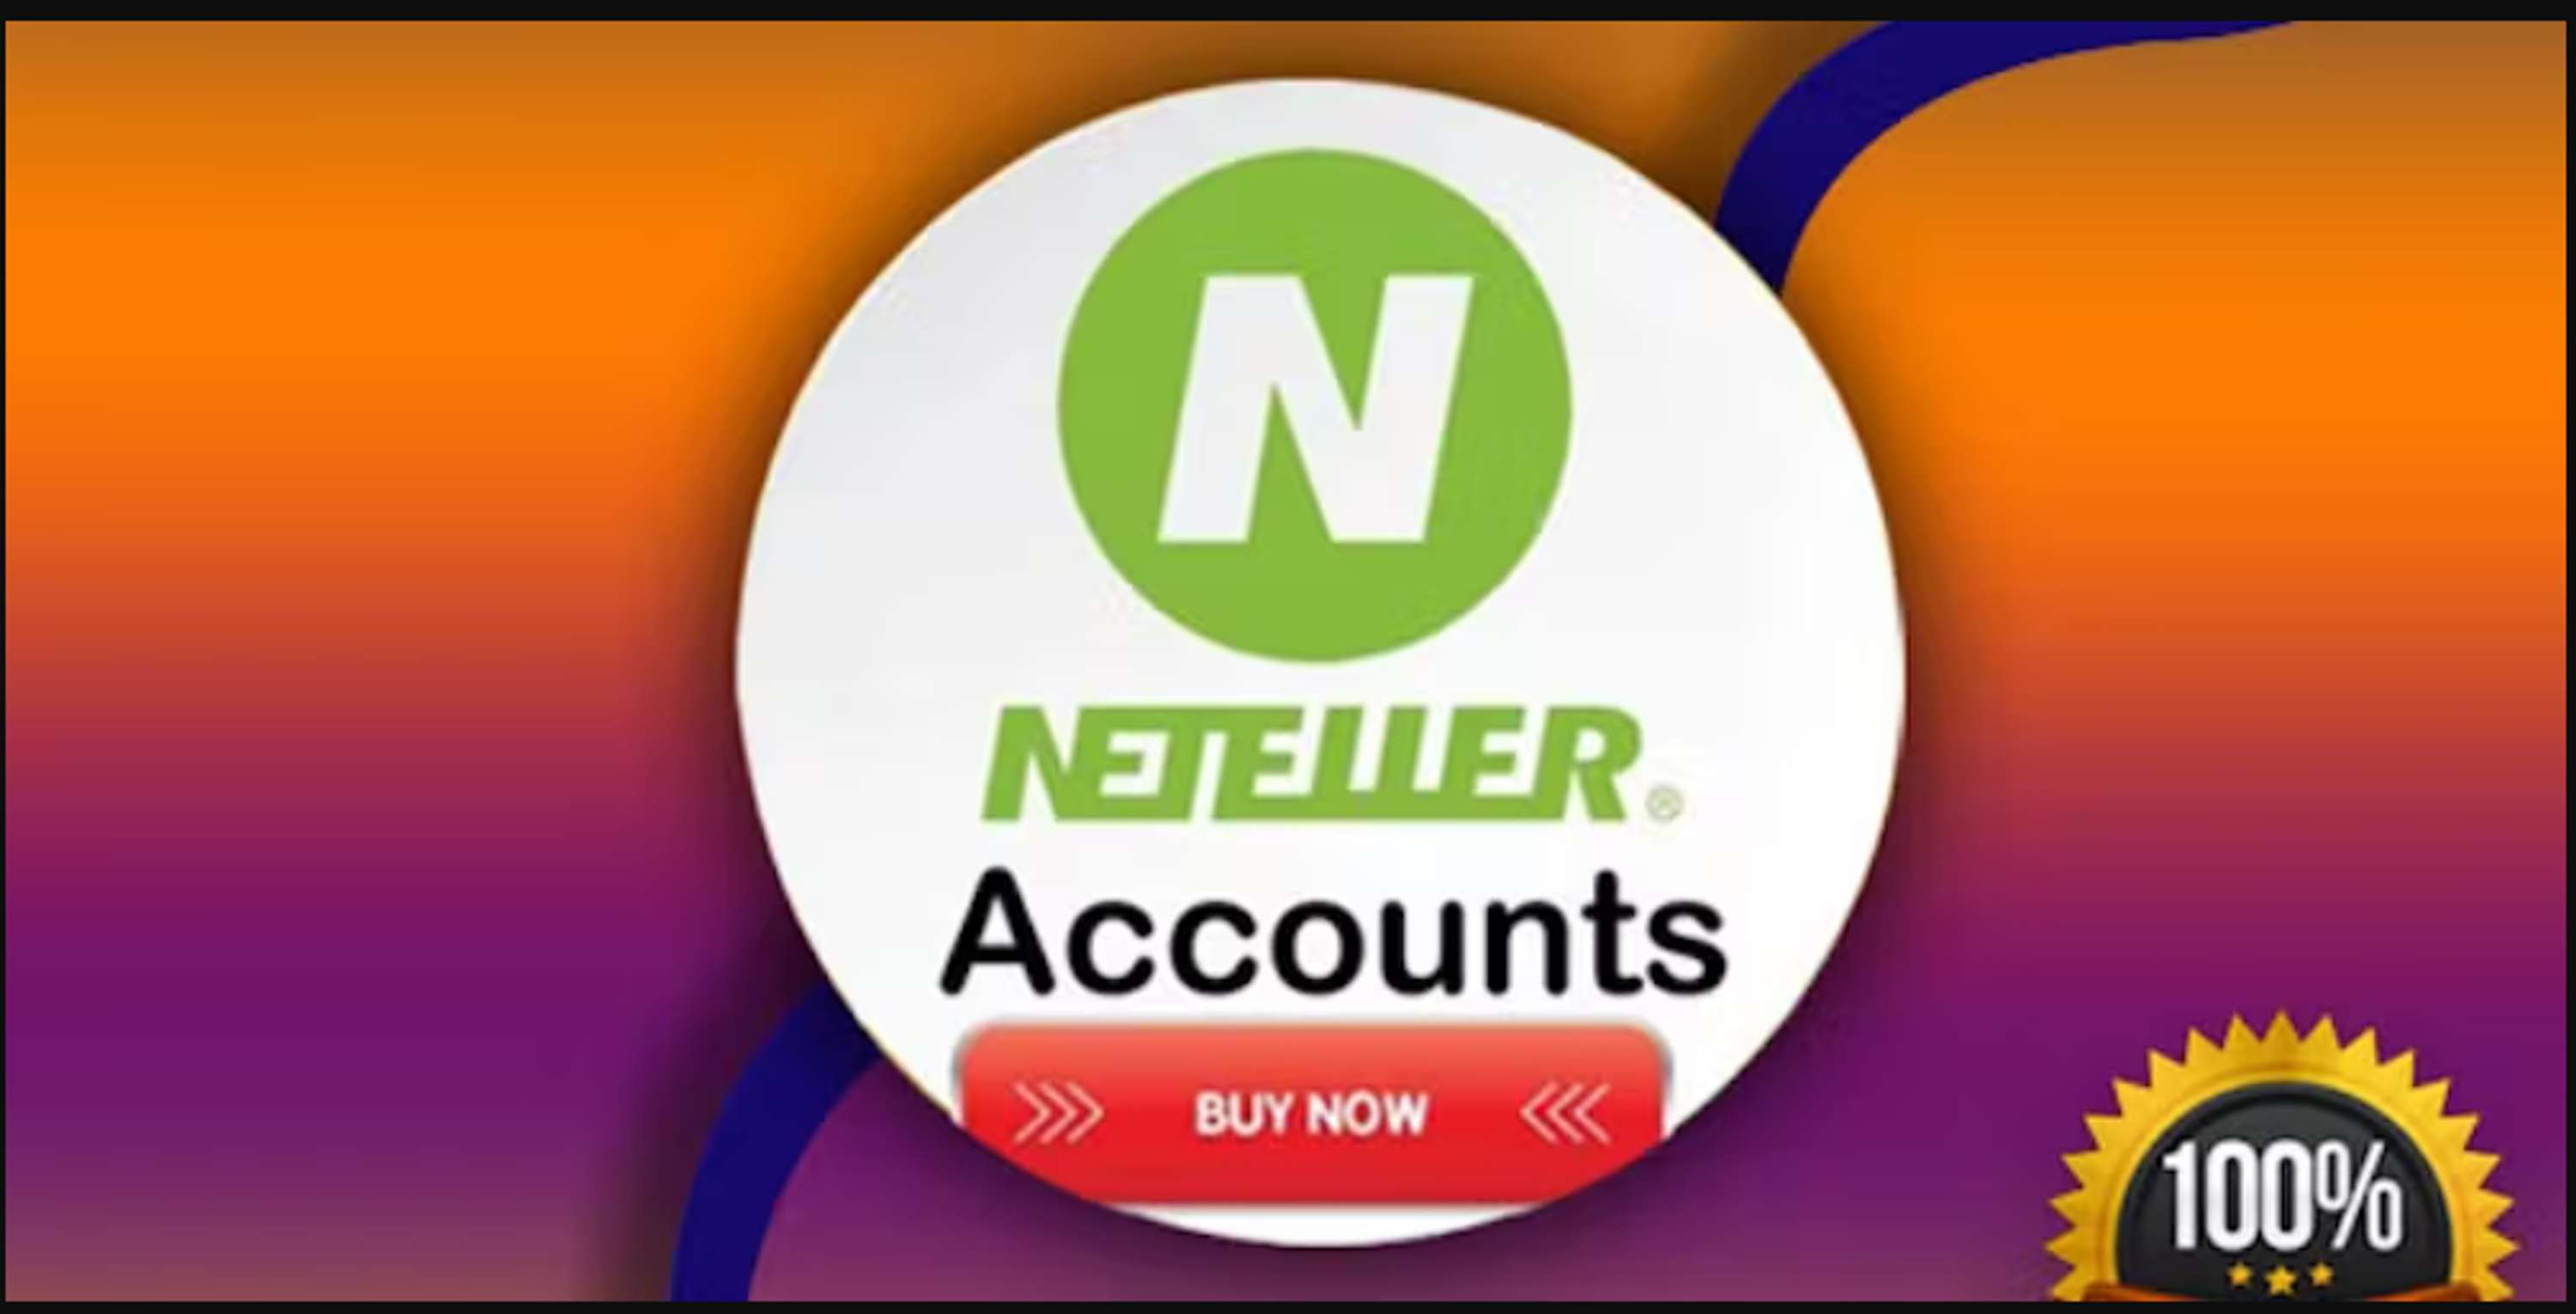 Buy Verified Neteller Accounts - % safe & verified